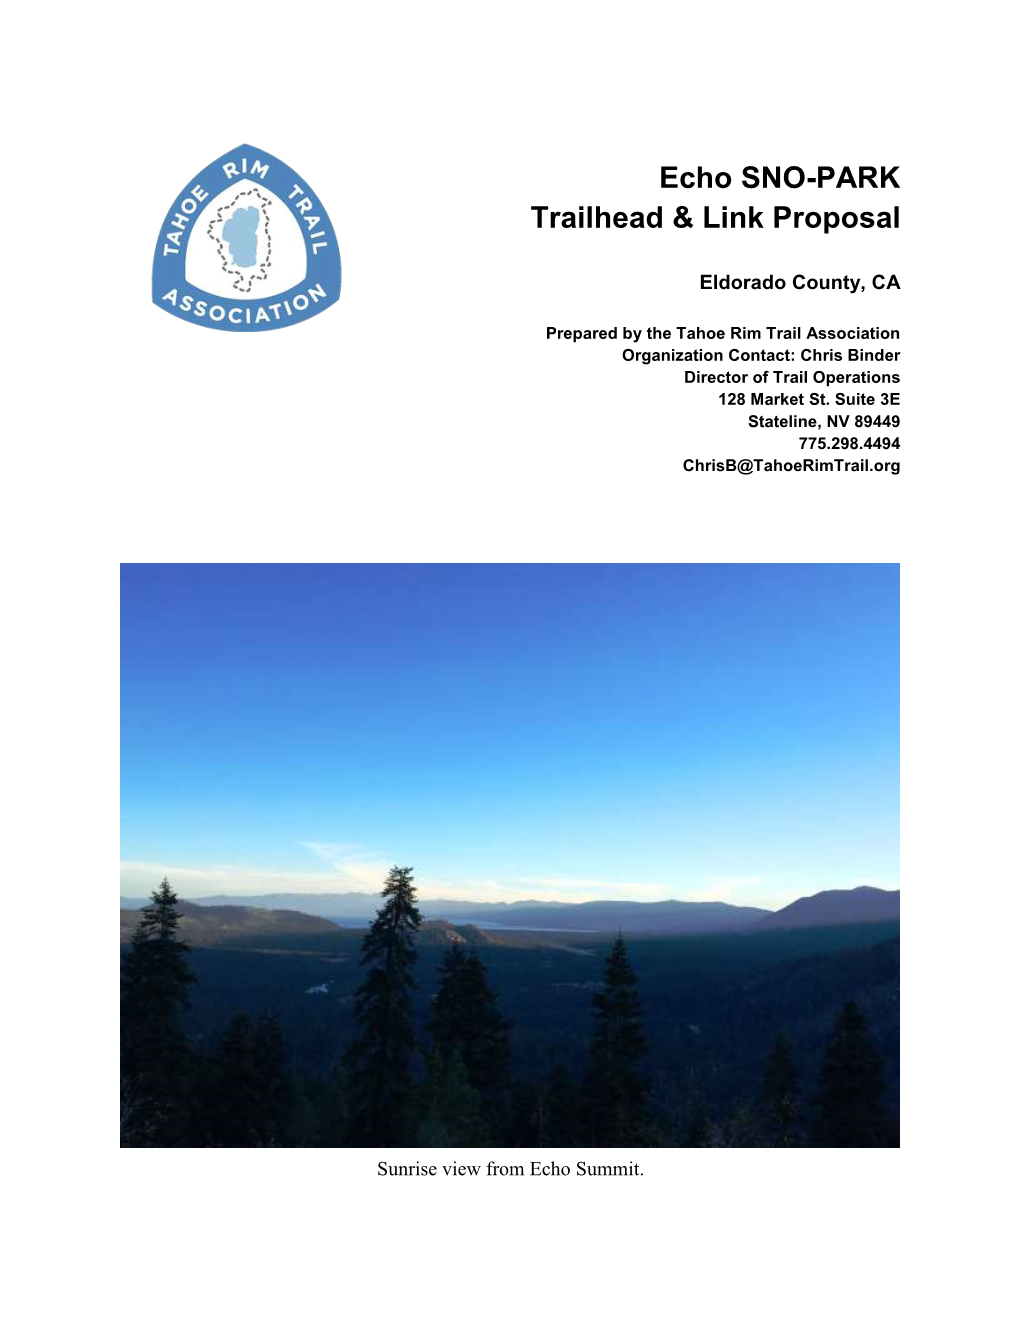 Echo SNO-PARK Trailhead & Link Proposal